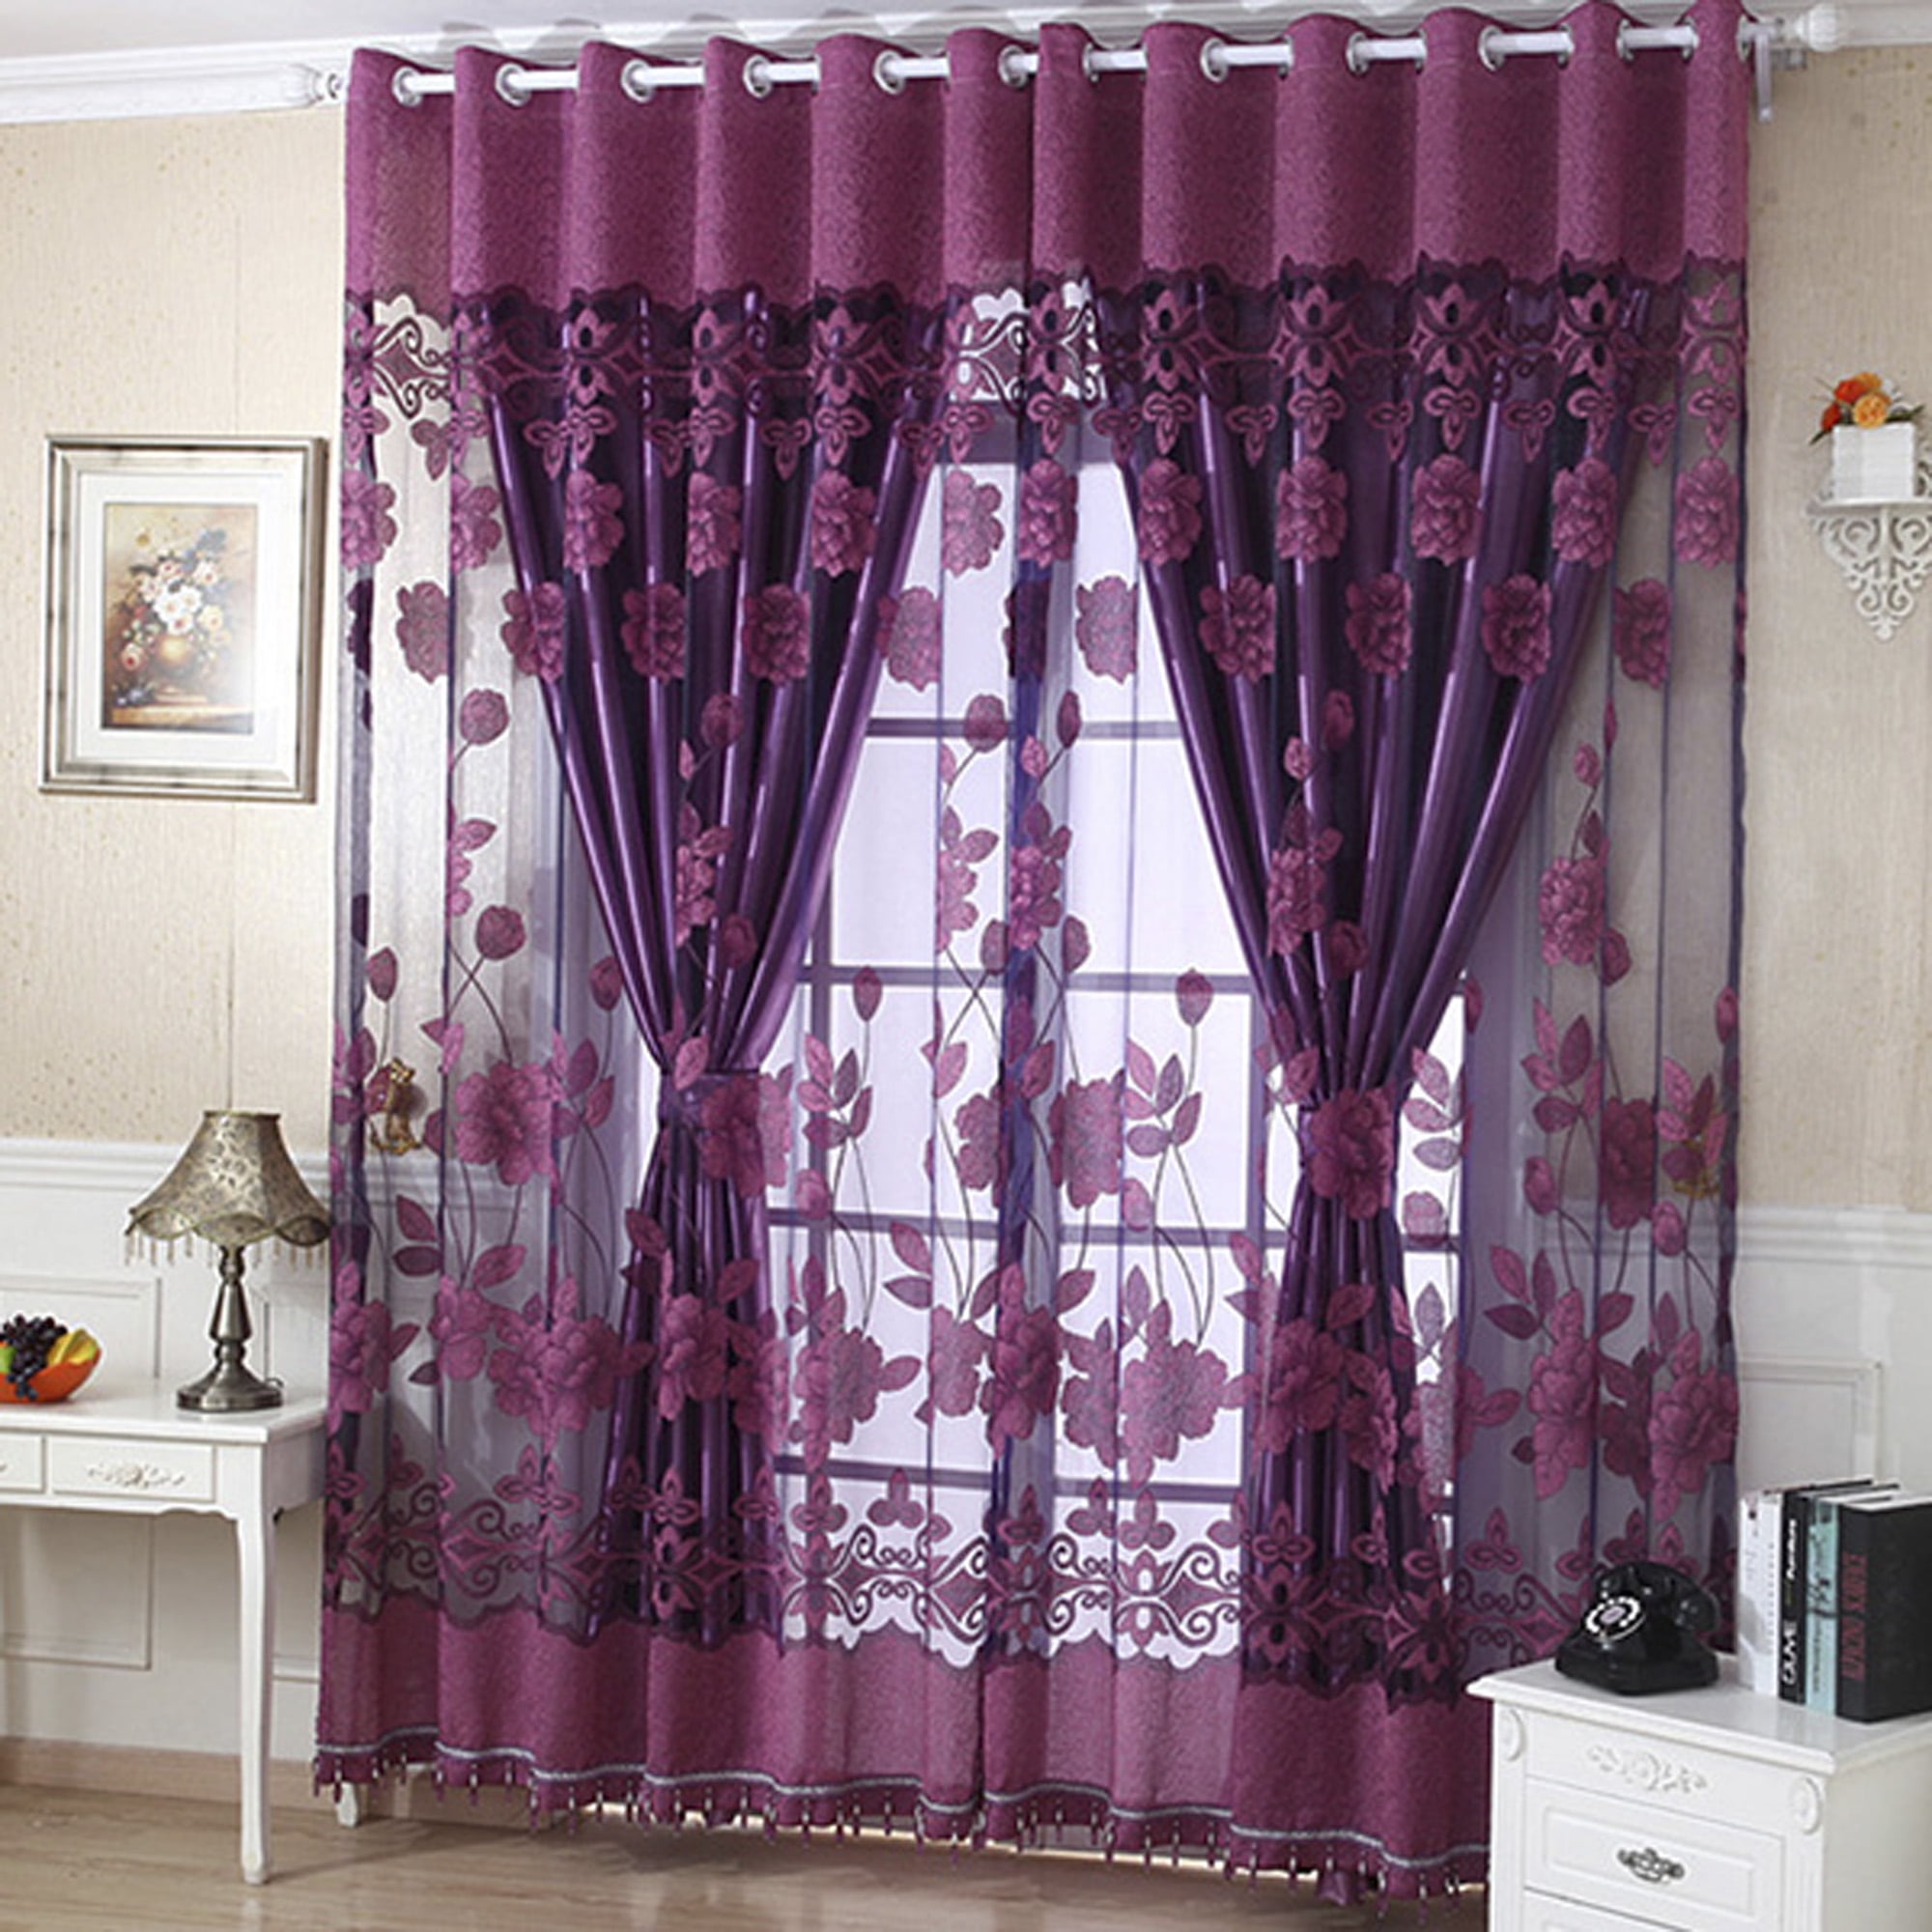 Lace Floral Tulle Voile Door Window Curtain Drape Panel Sheer Scarf Valance Bulk 